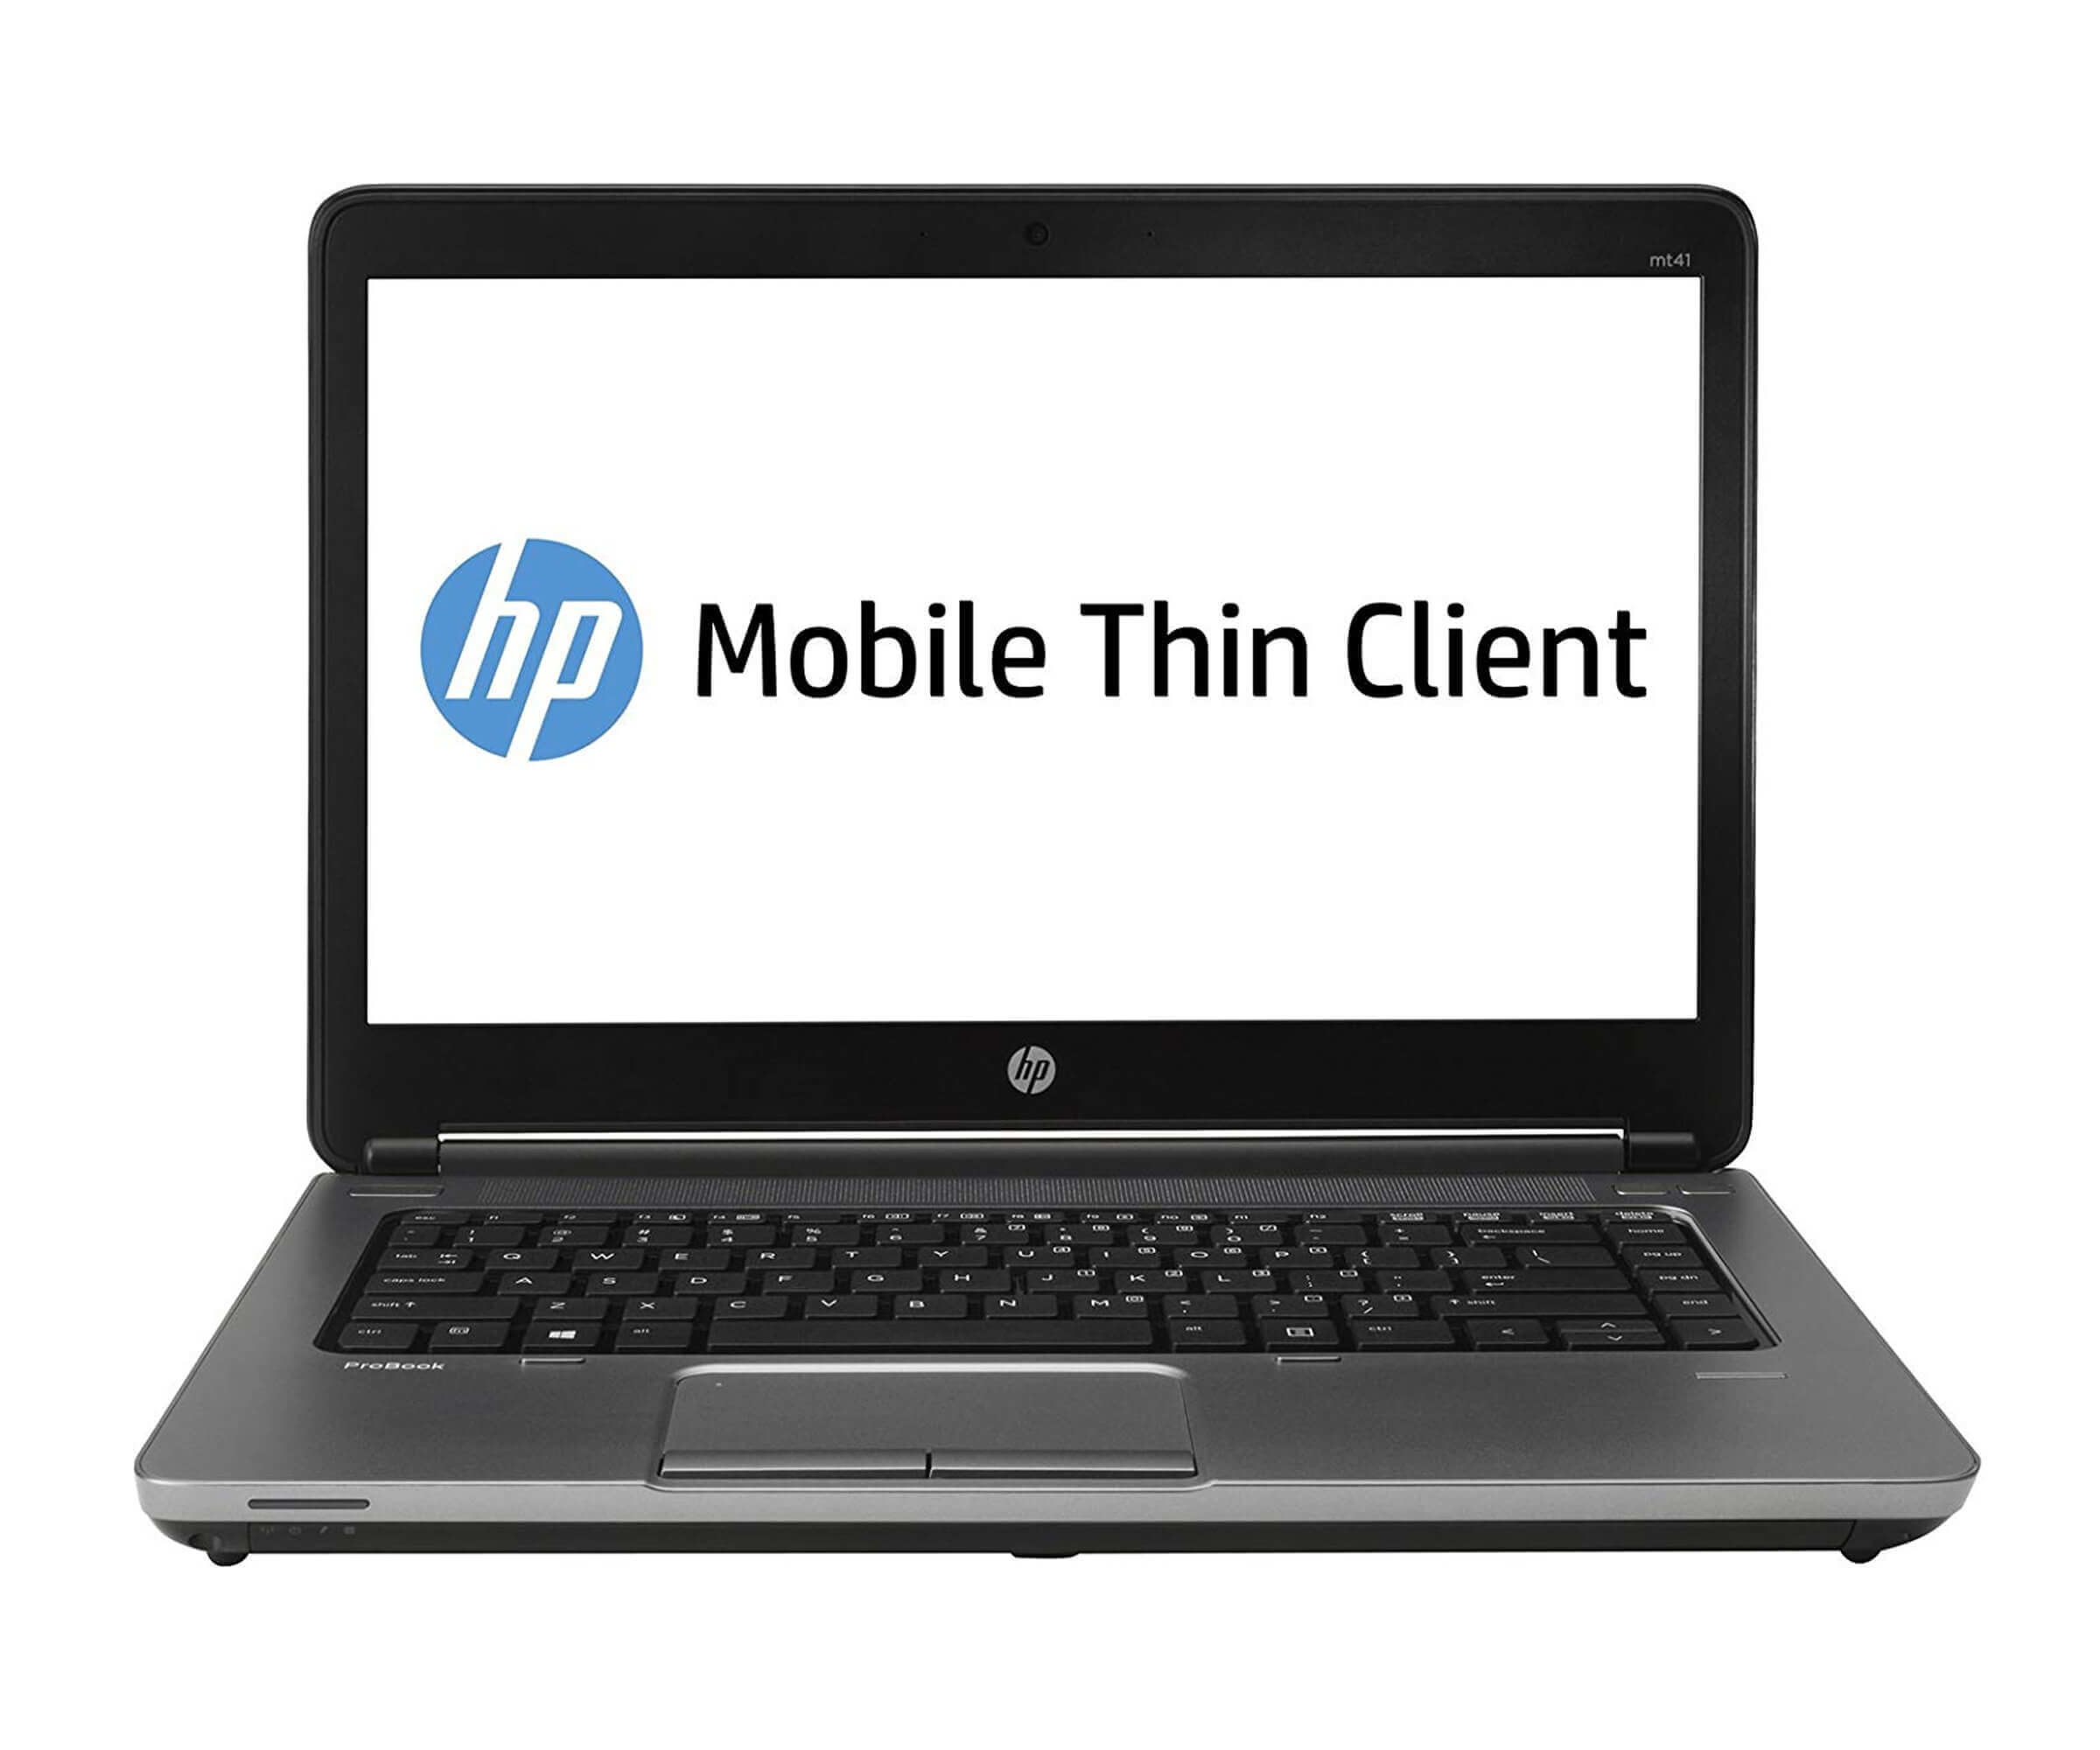 Laptop HP mt41 Mobile Thin Client, AMD A4-5150M 2.70GHz, 4GB DDR3, 320GB SATA, DVD-RW, Webcam, 14 Inch